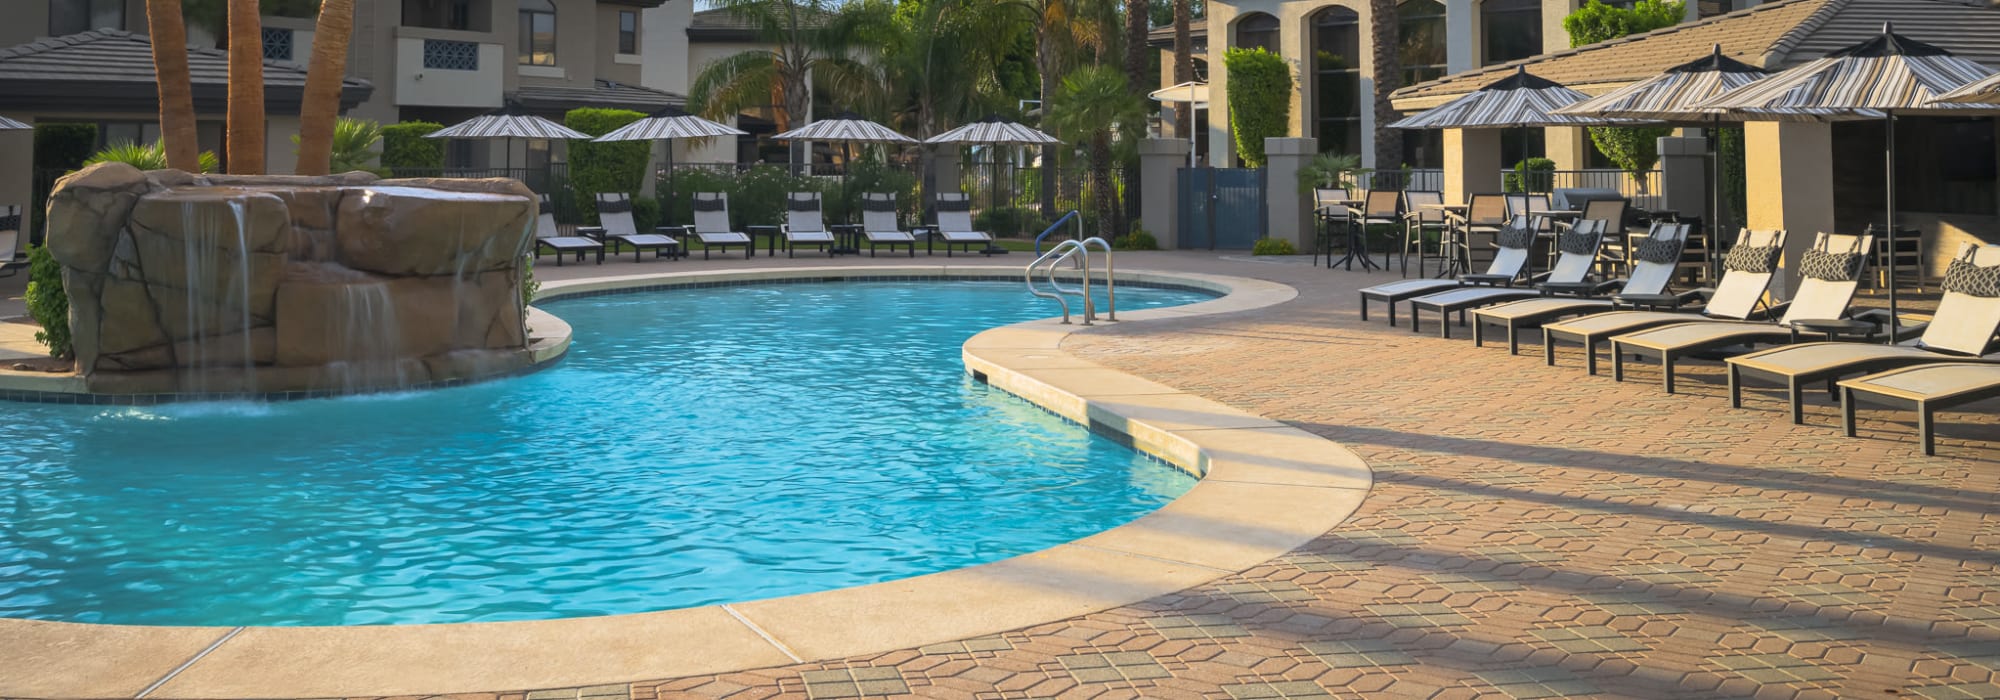 Resort-style swimming pool at Ascend at Kierland in Scottsdale, Arizona